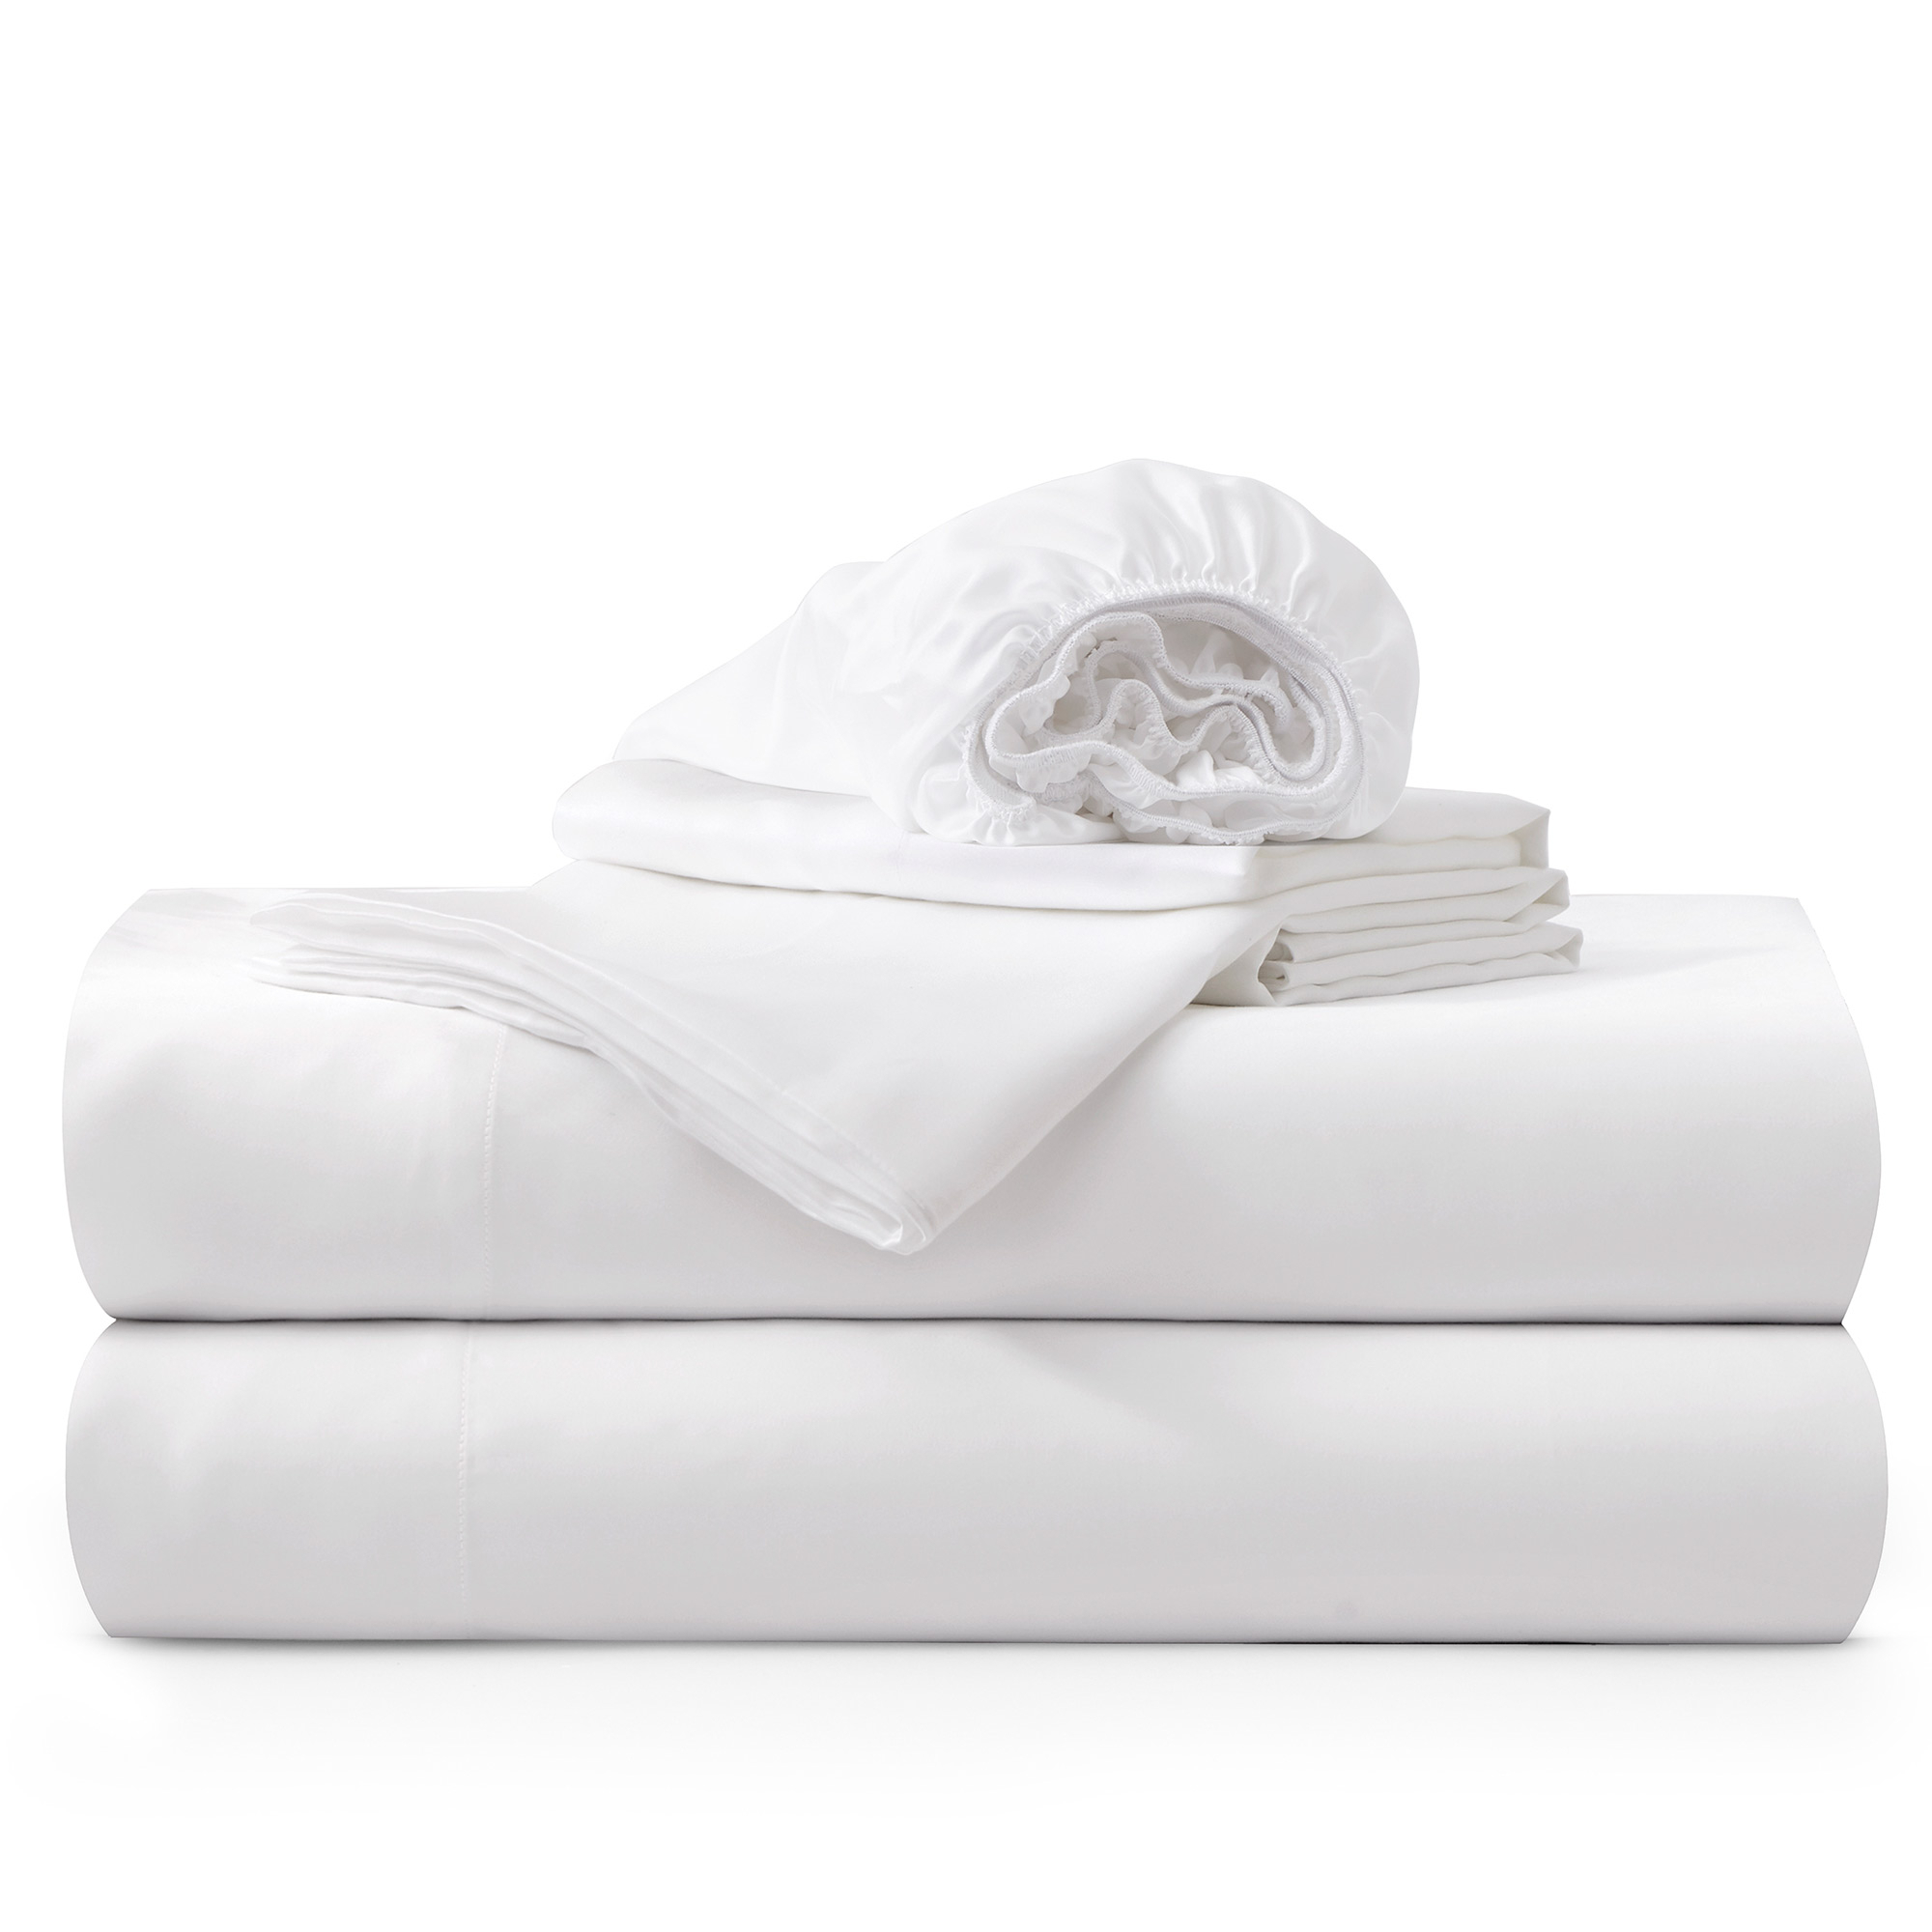 Silky Soft TENCELâ¢ Lyocell Cooling Sheet Set-Breathability And Moisture-wicking Bedding Set - Lucent White, King